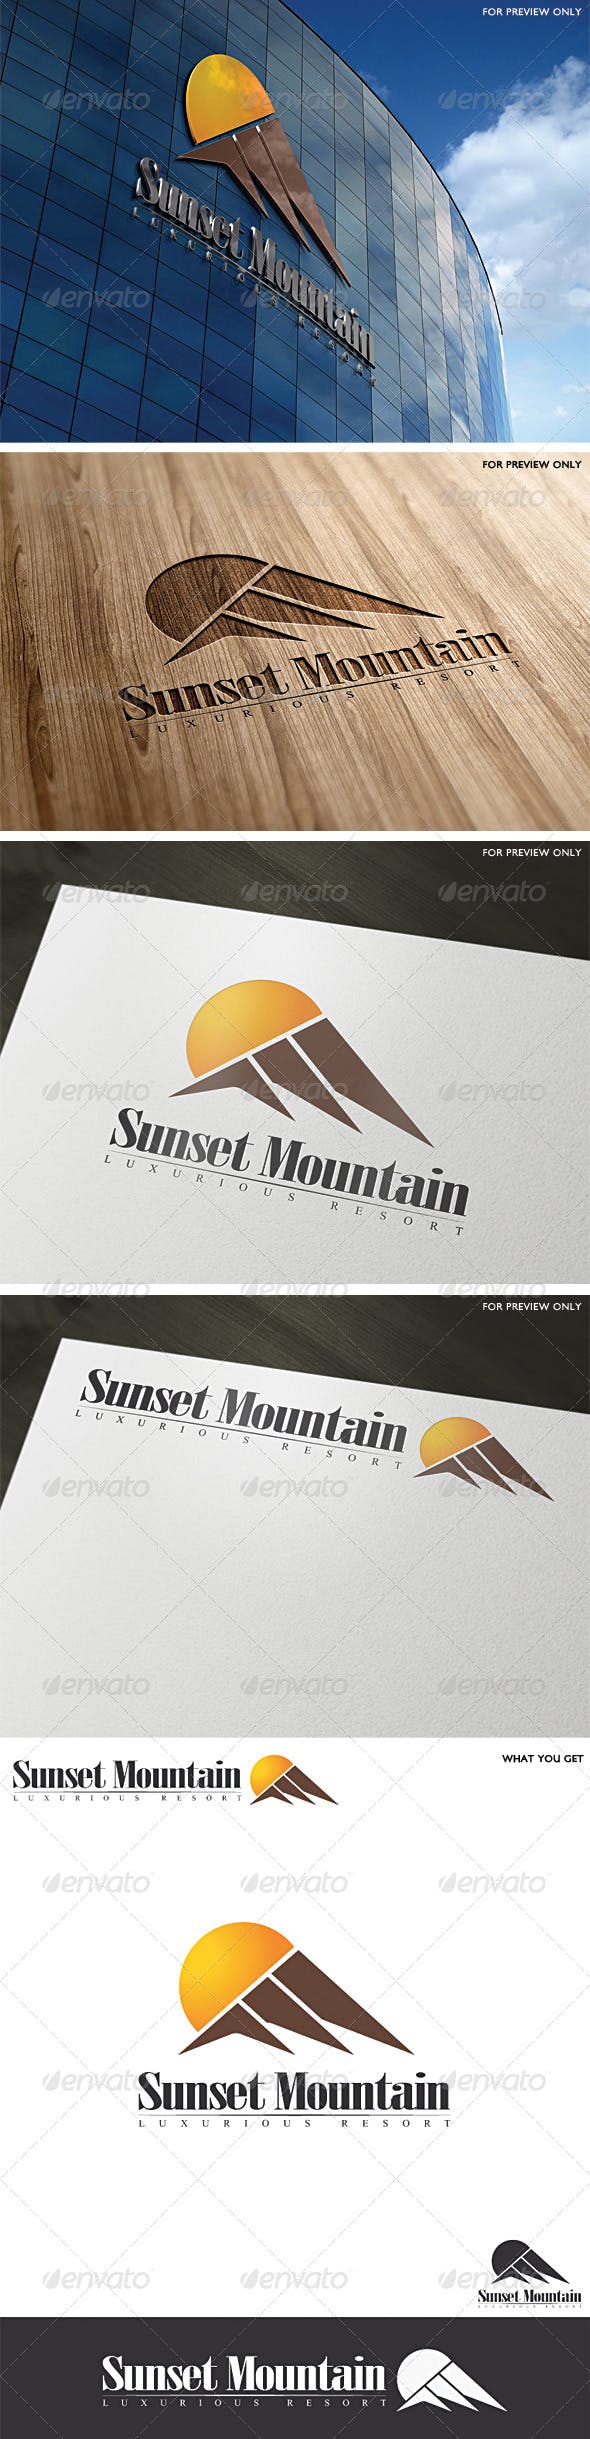 Sunset Mountain Logo - Sunset Mountain Resort Logo Template by EladChai | GraphicRiver